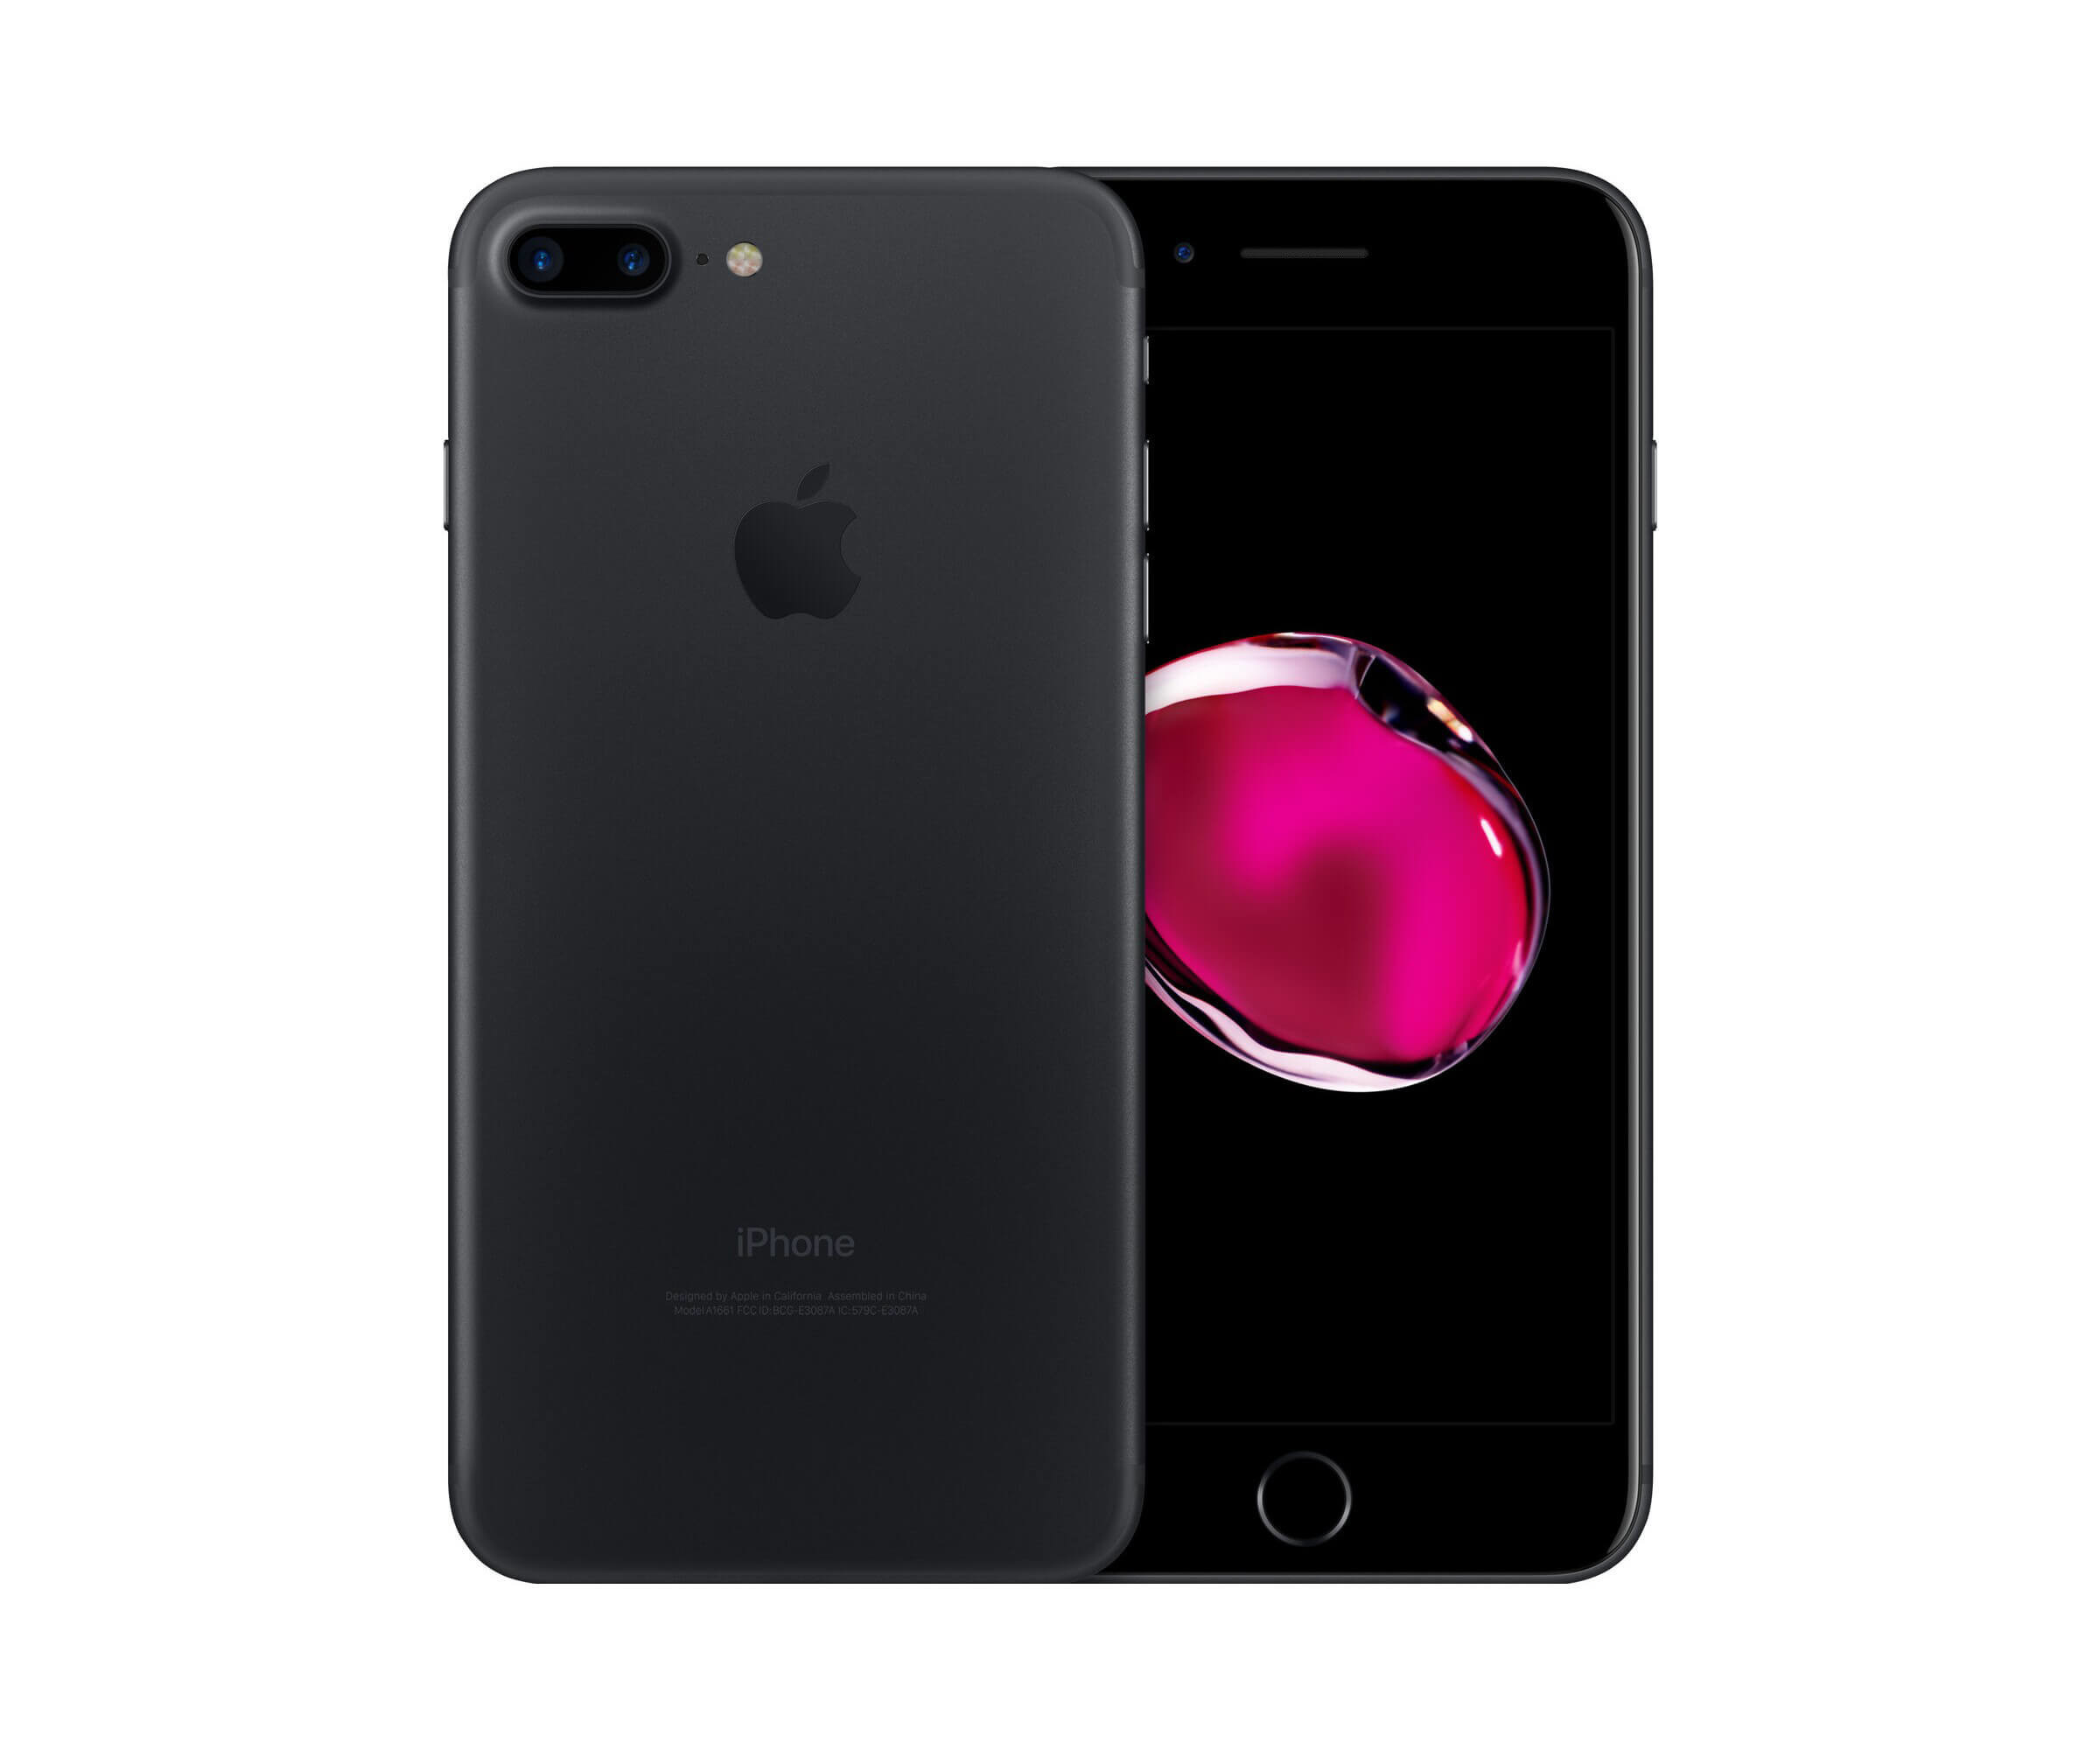 Apple iPhone 7 Plus - Smartphone - 4G LTE Advanced - 32 GB - GSM - 5.5